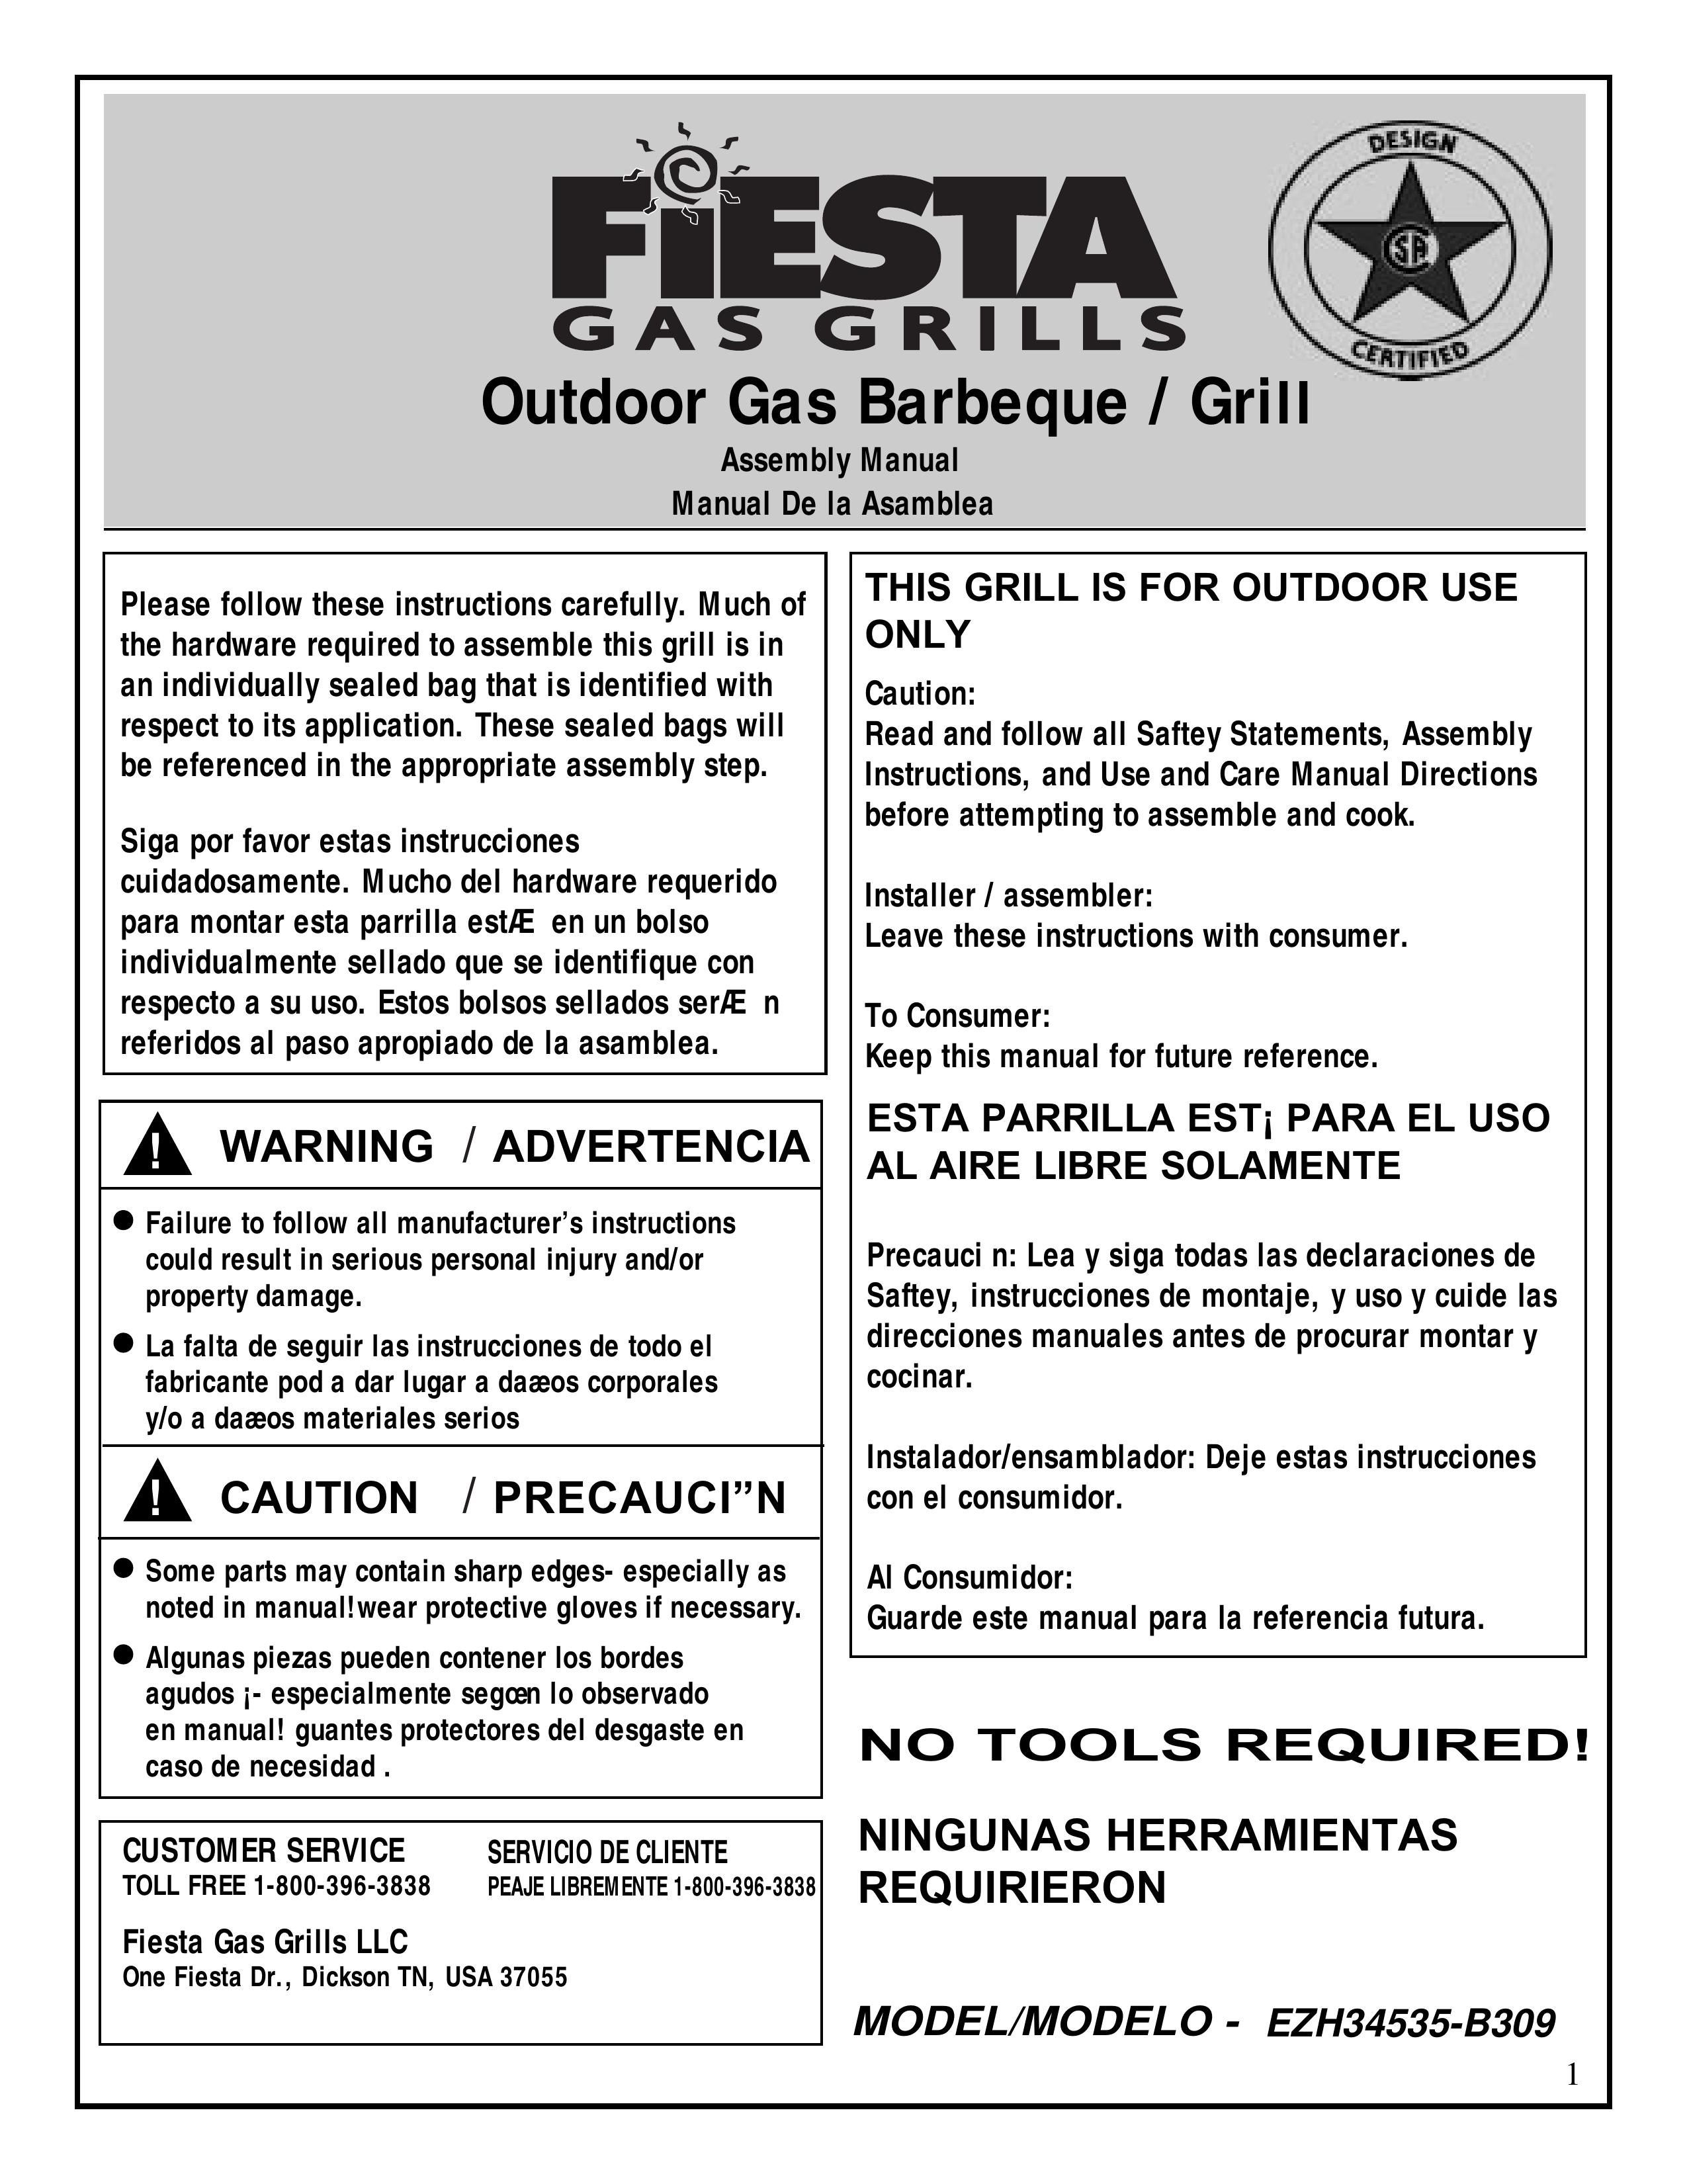 Fiesta EZH34535-B309 Gas Grill User Manual